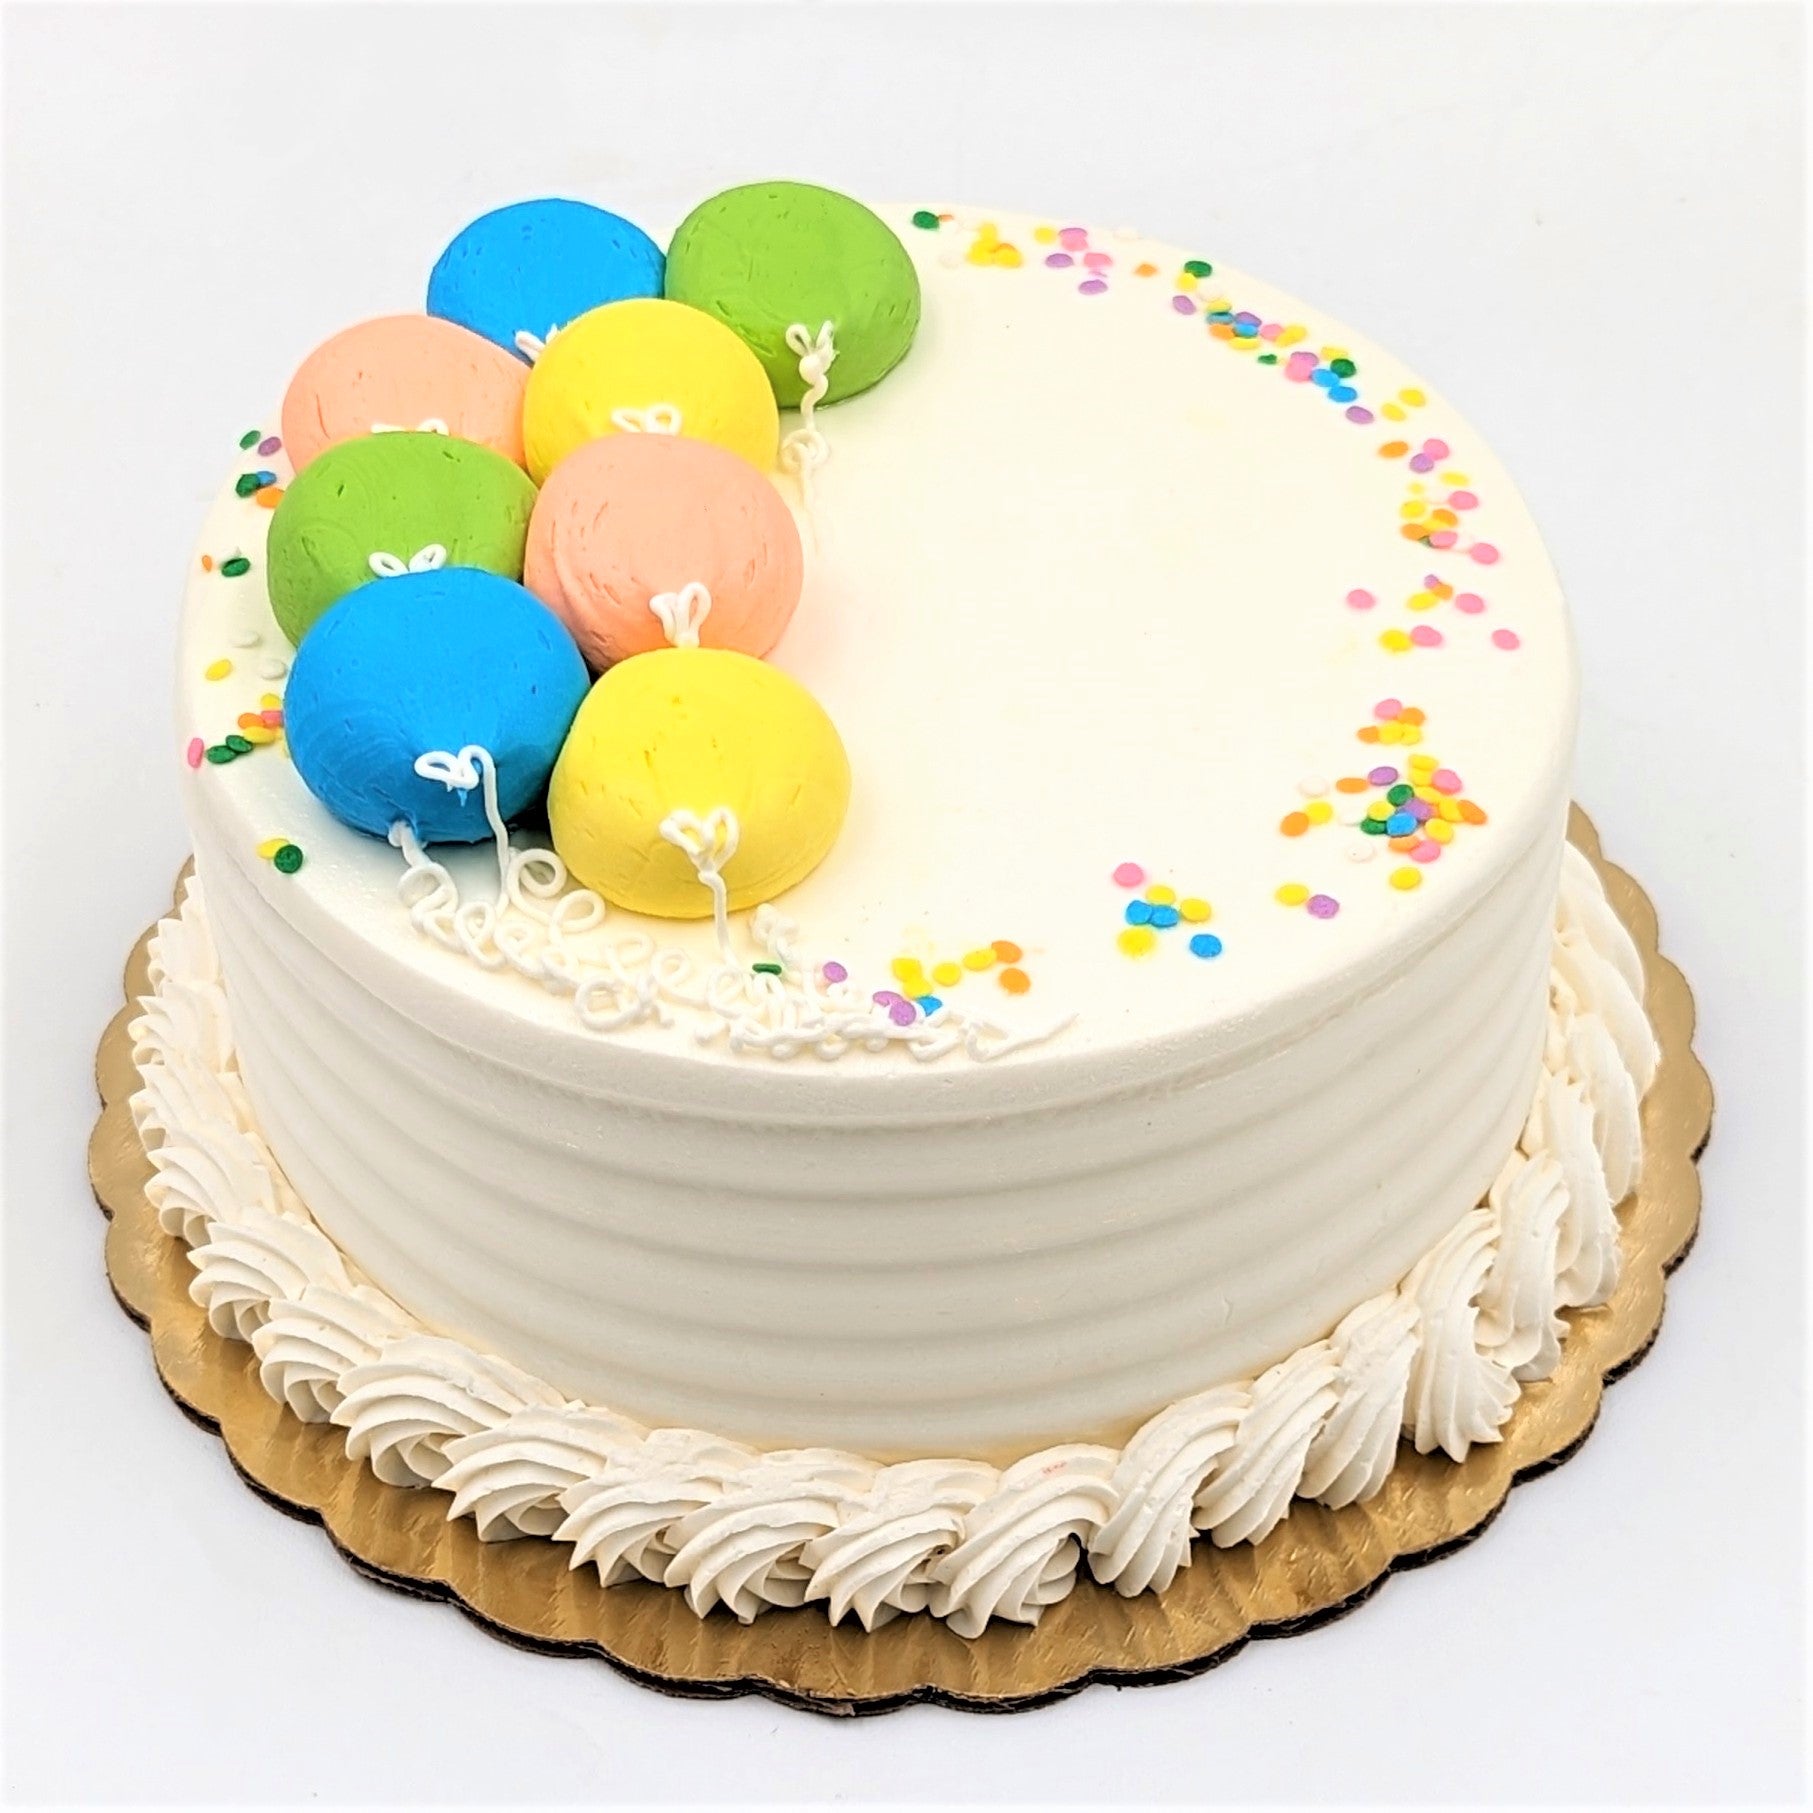 Balloon cake | Buttercream decorating, Cake decorating videos, Balloon cake